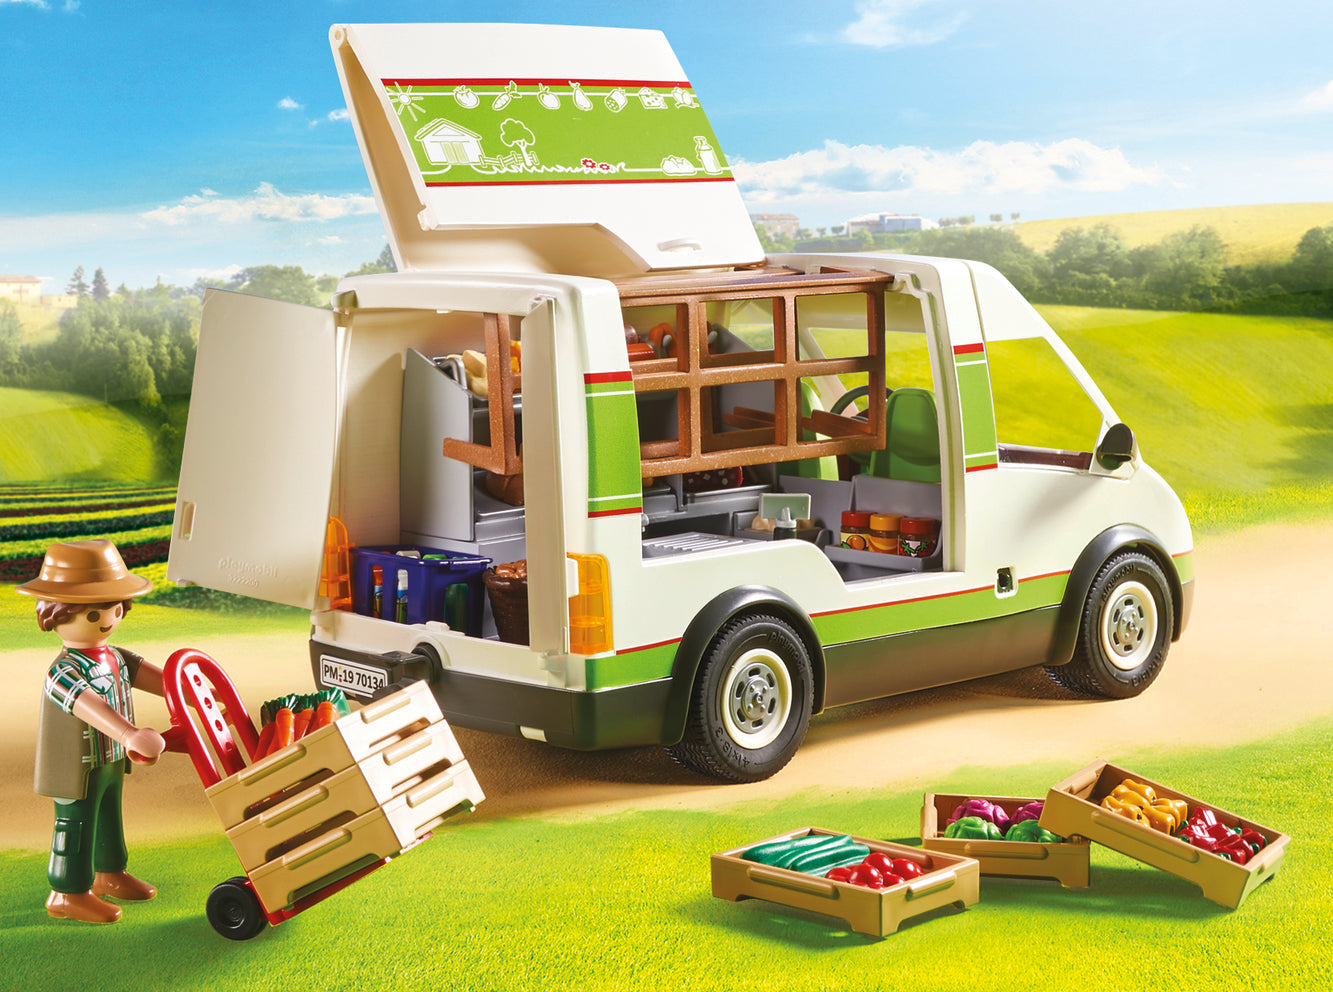 Playmobil Country: Mobile Farmer's Market Van - Nimble Fingers